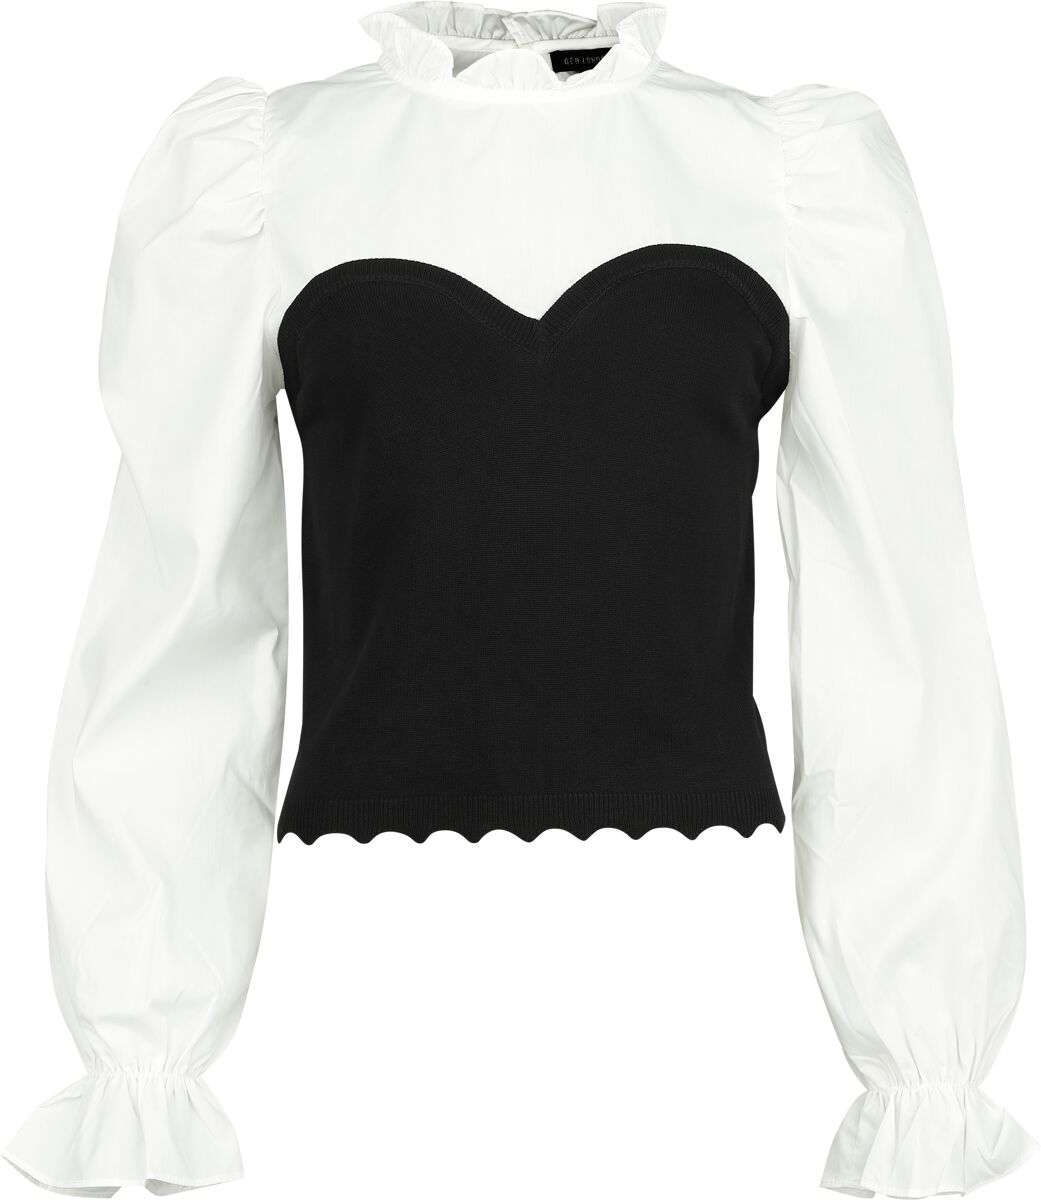 QED London Corset Detail Frill Collar Puff Sleeve Shirt Bluse schwarz weiß in L